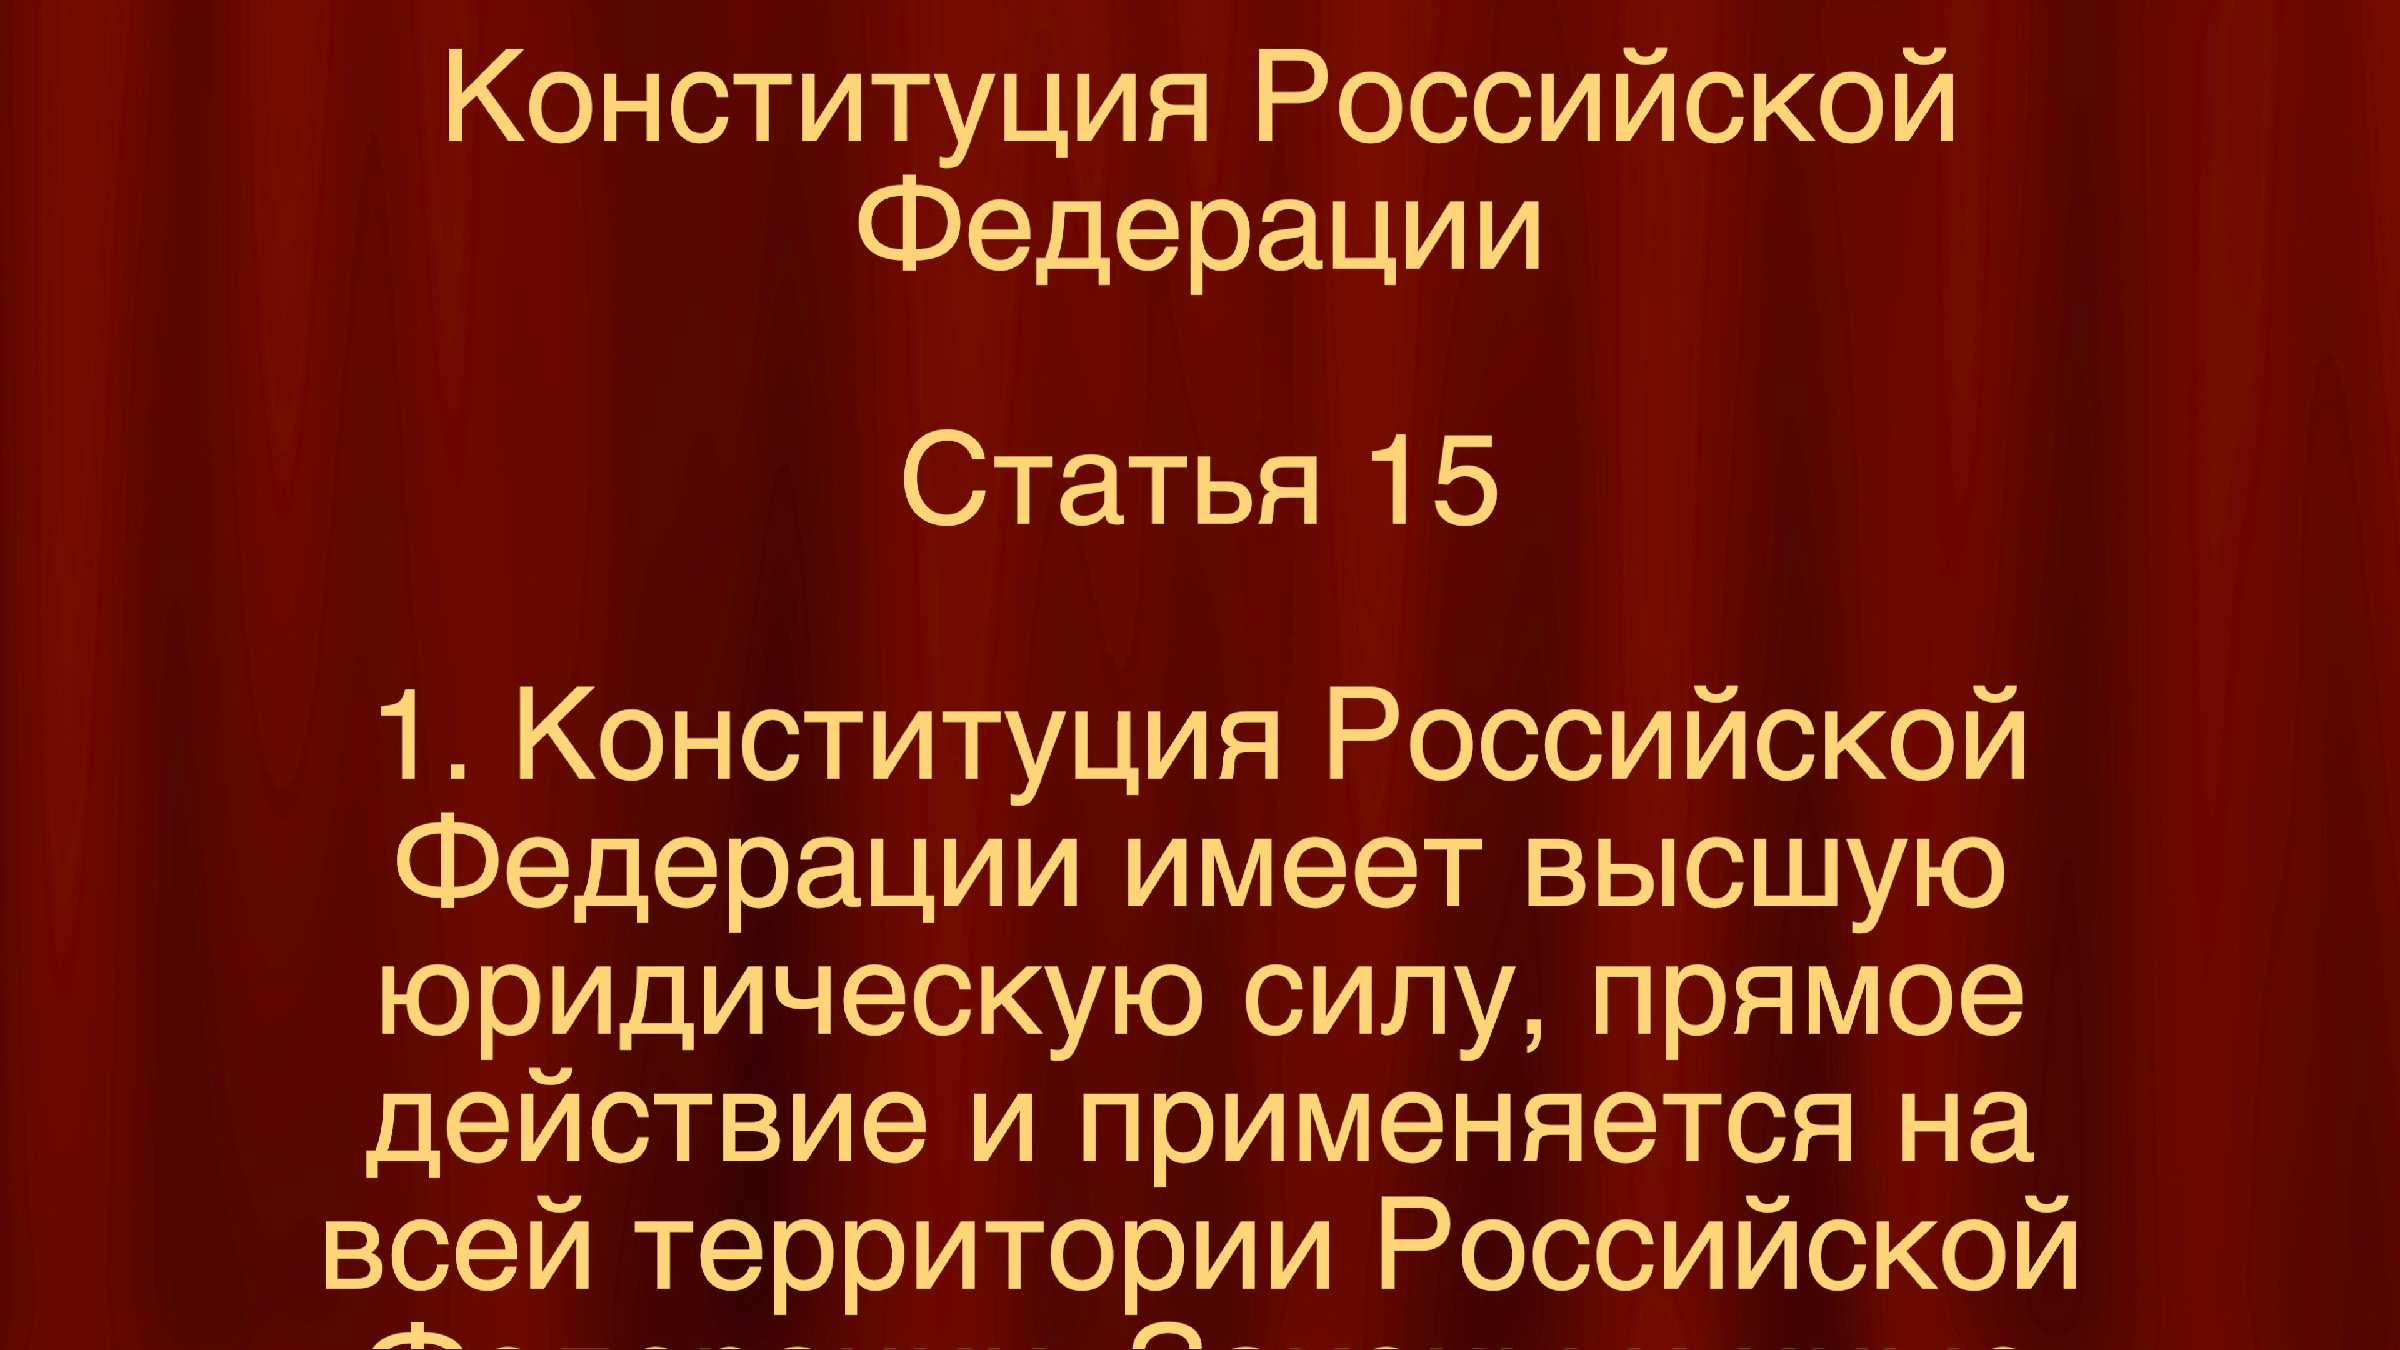 Конституции 15 Красноярск. П 15 конституции